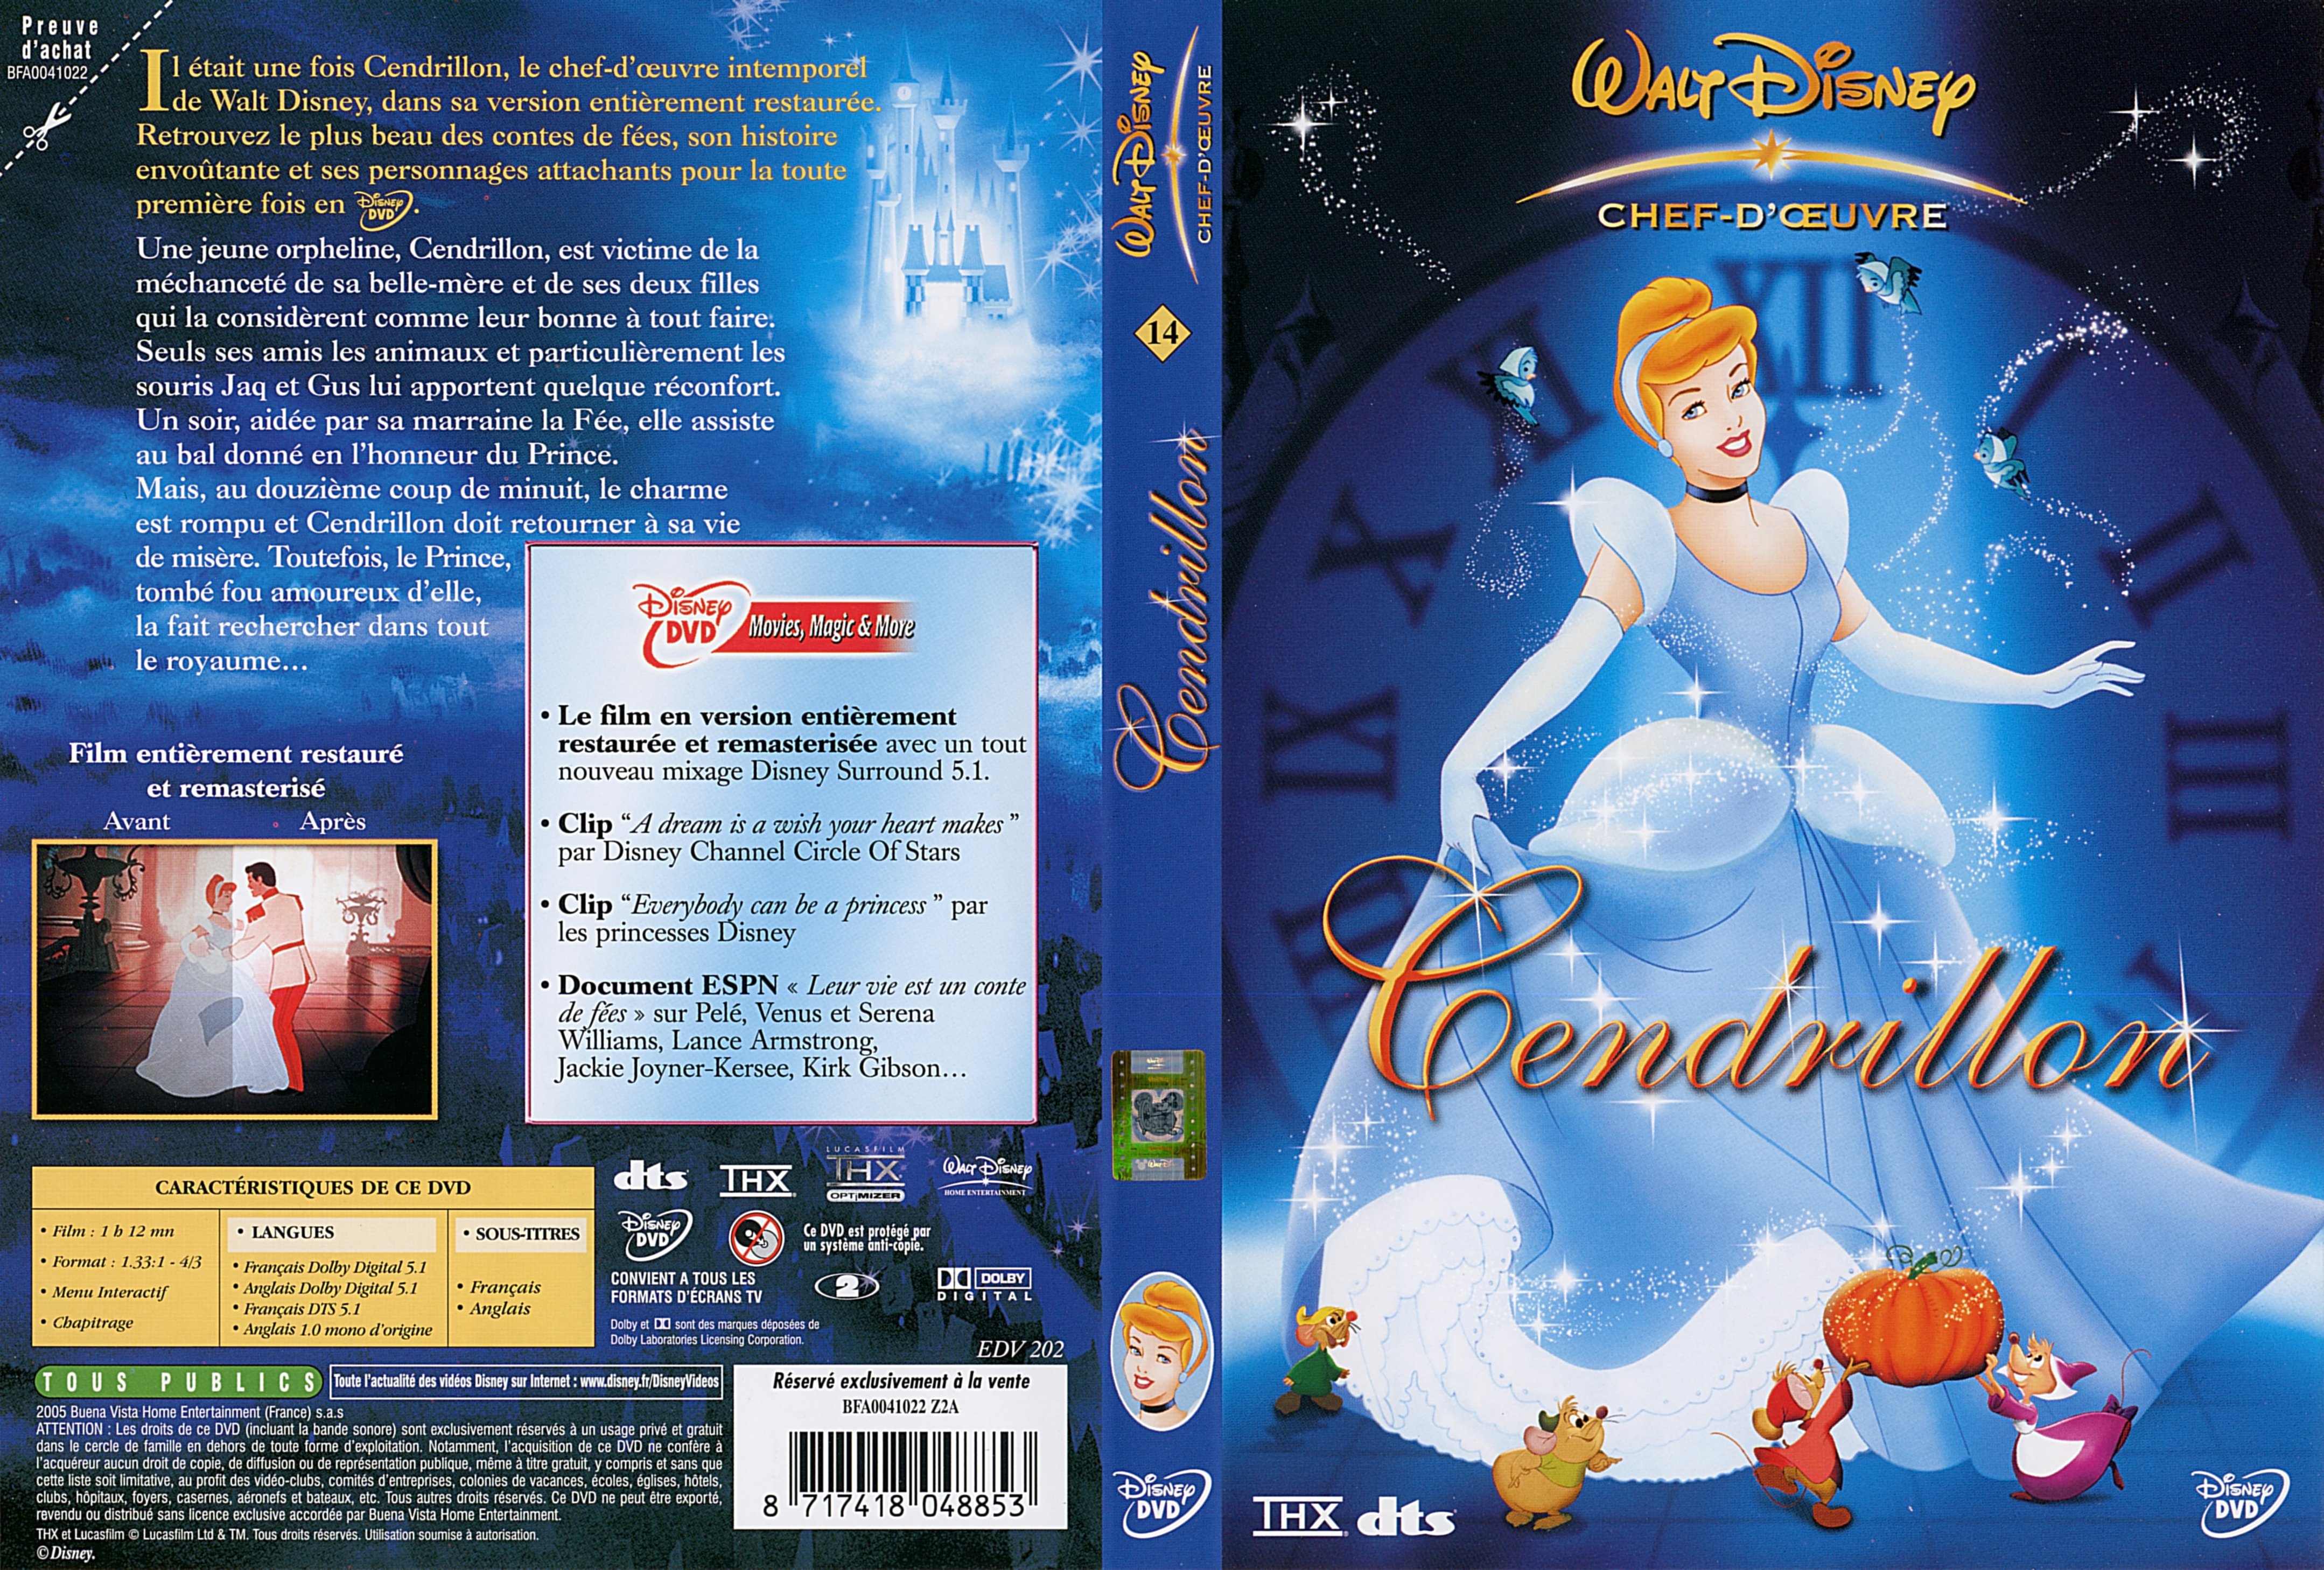 Jaquette DVD de Cendrillon v2 - Cinéma Passion